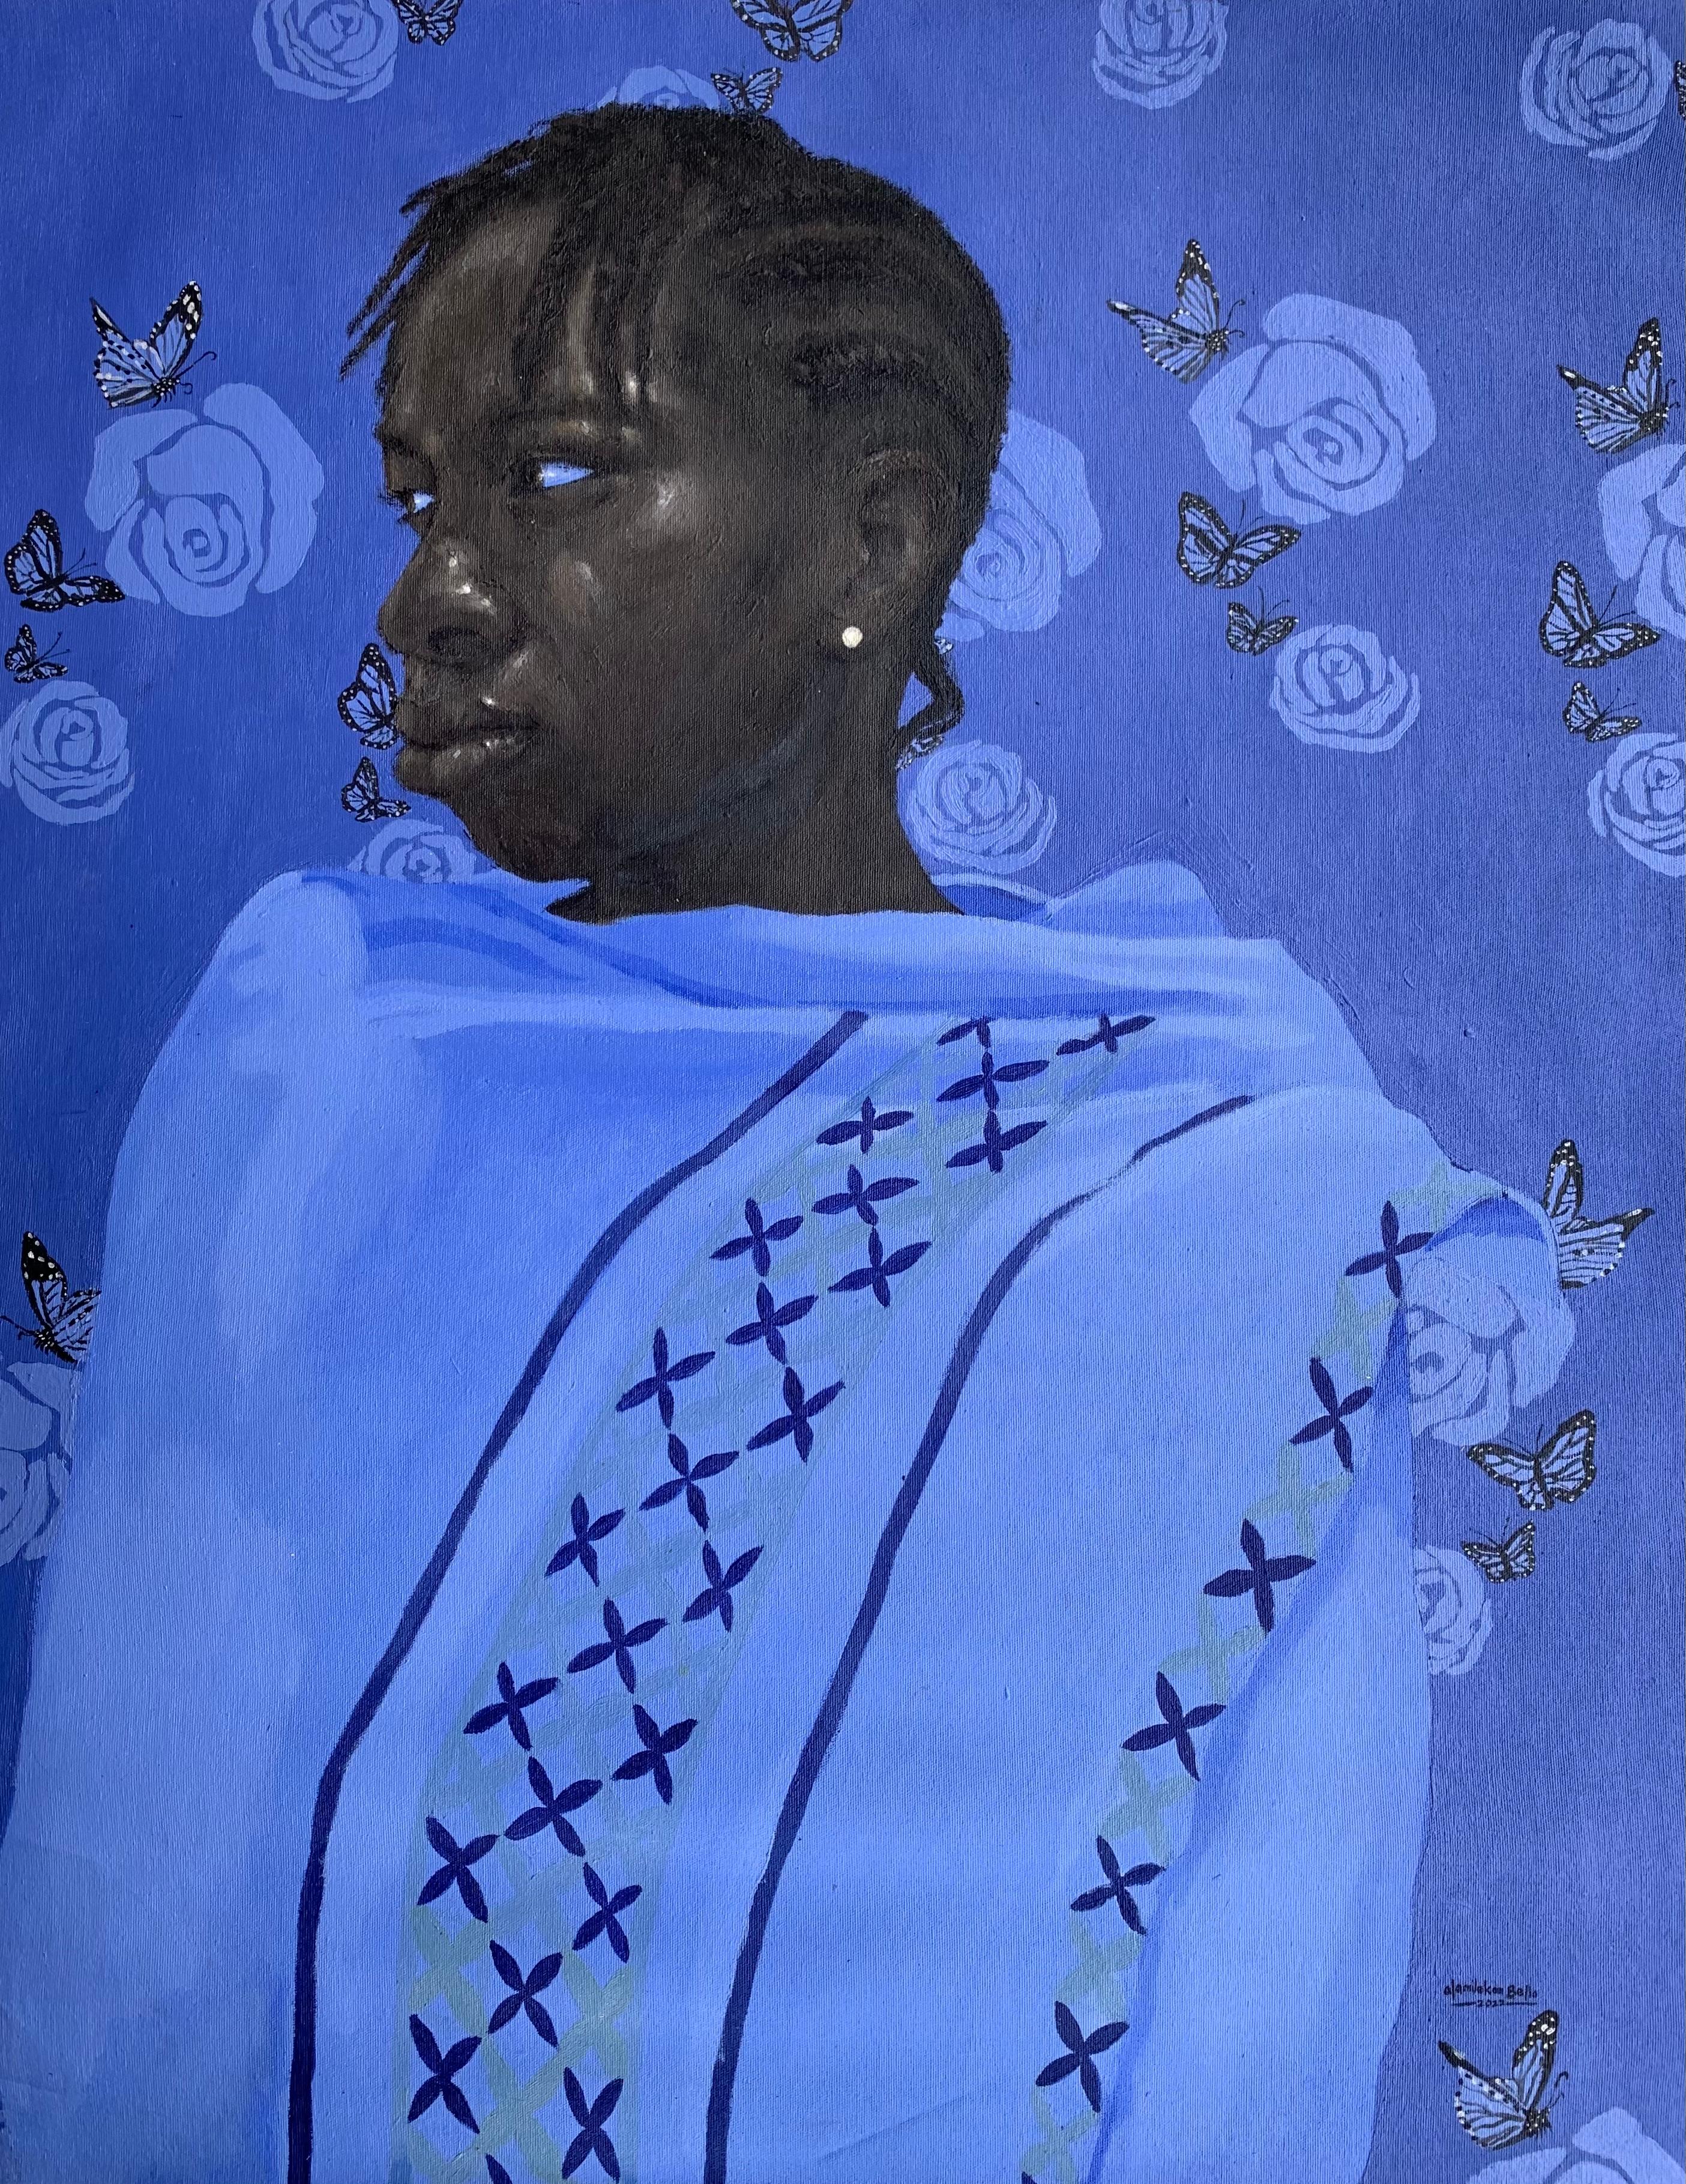 Olamilekan Bello Figurative Painting - Blue Towel 2